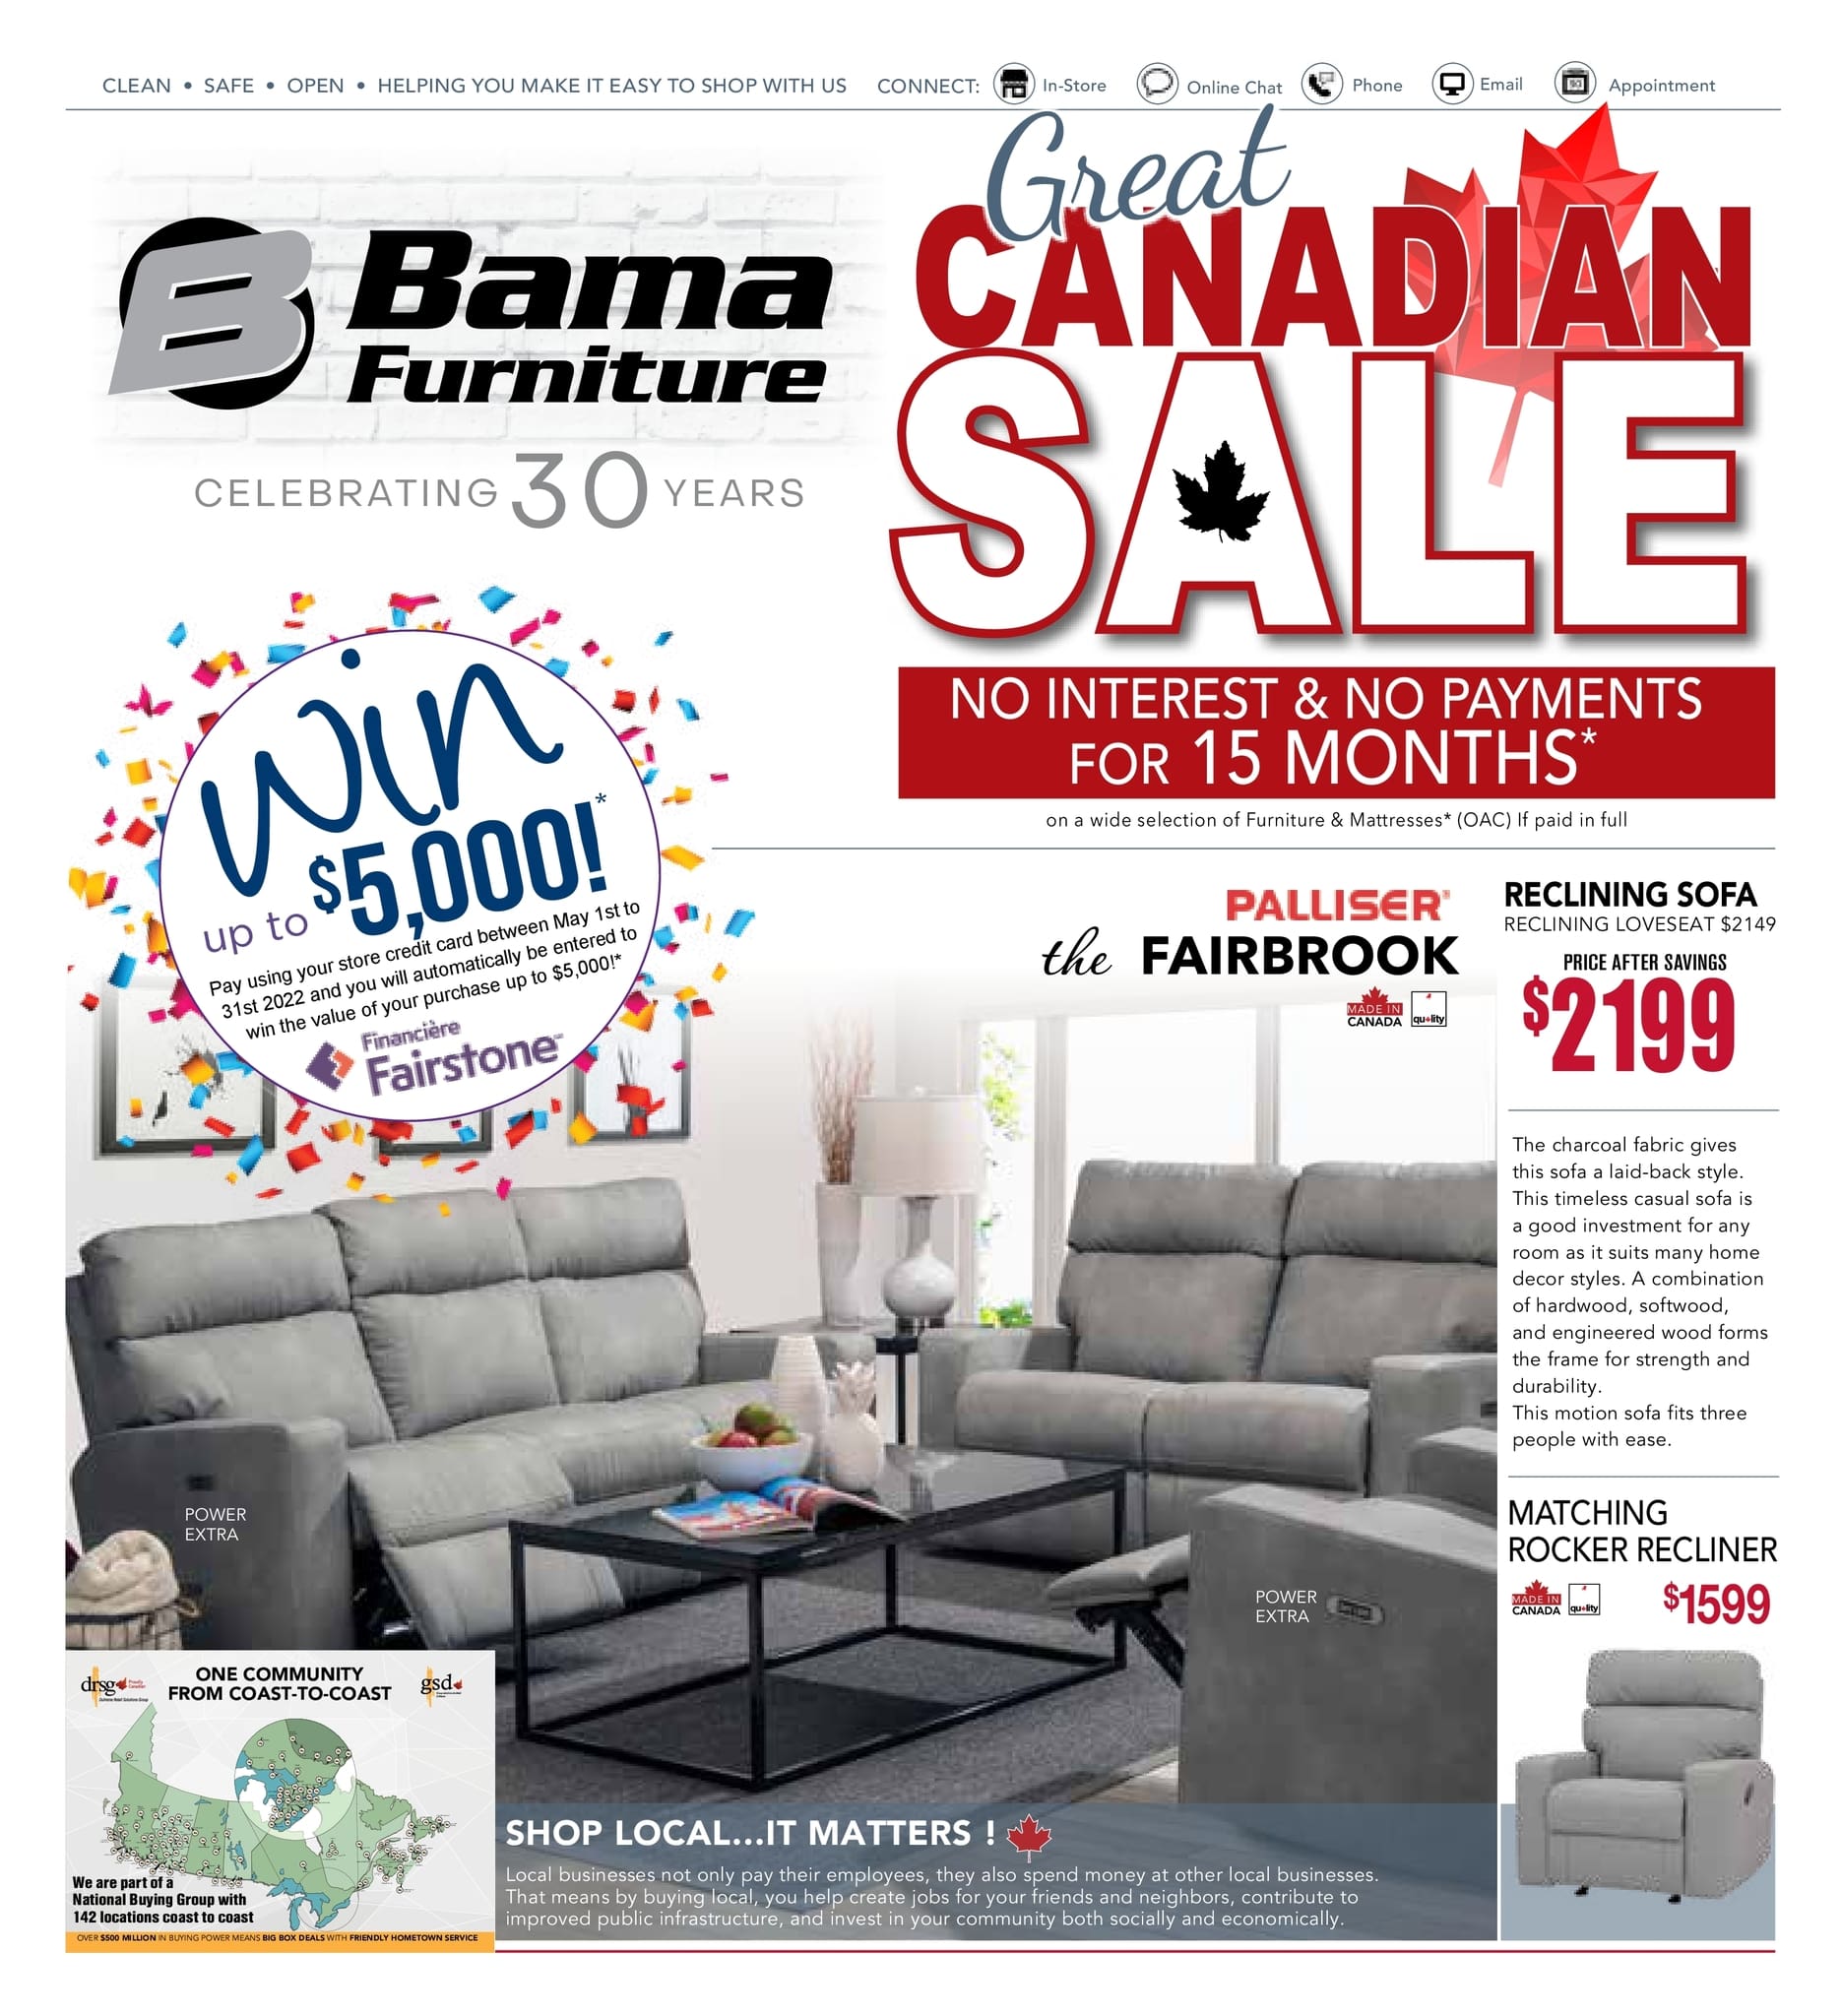 Bama Furniture - Great Canadian Sale